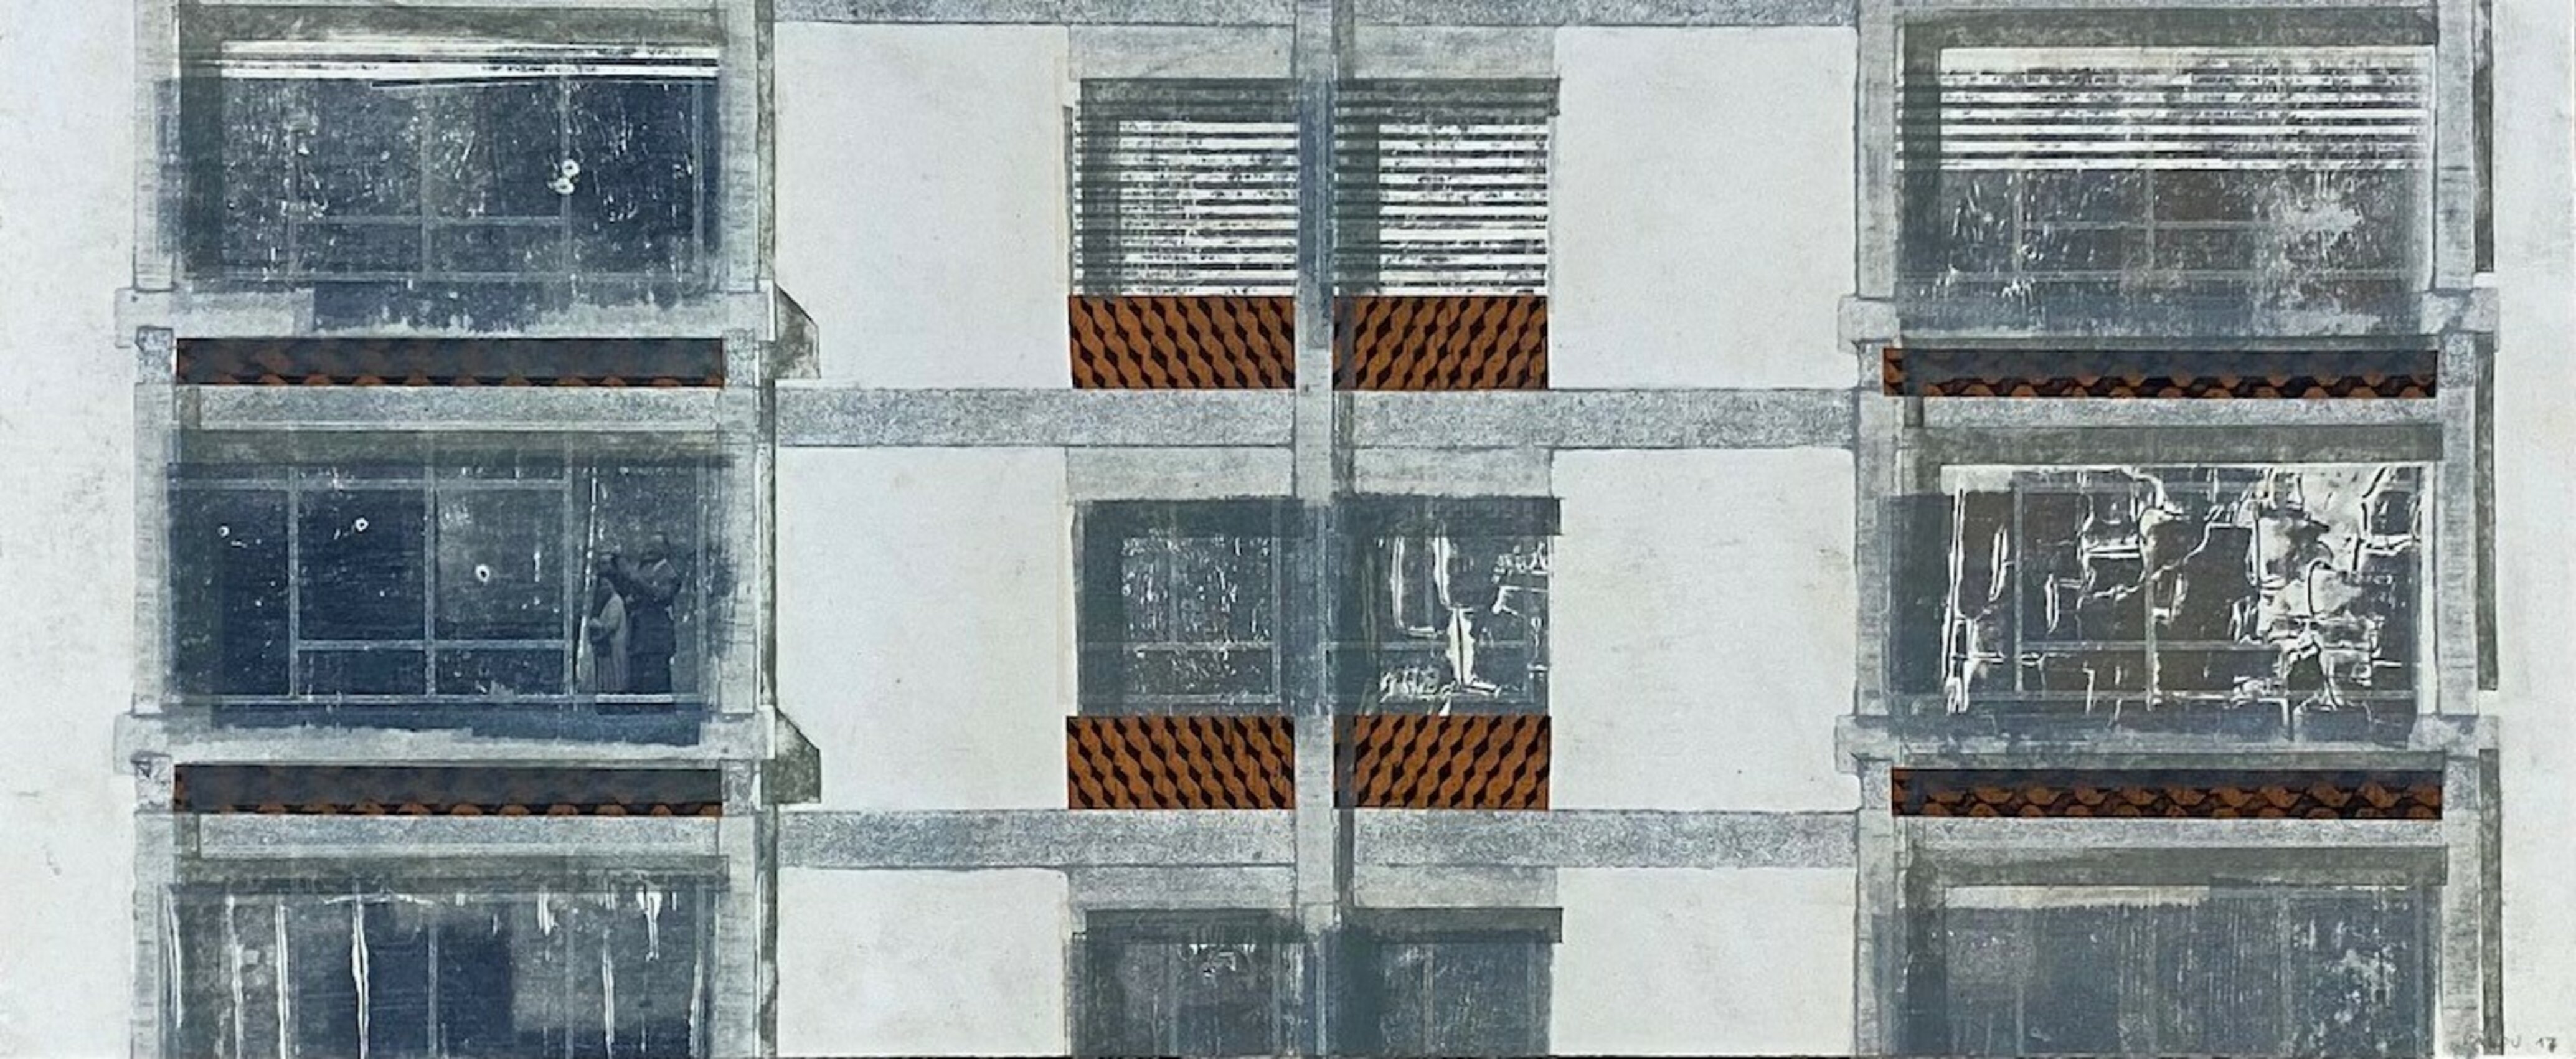 Serie Moragas Brusi, fragment horizontal